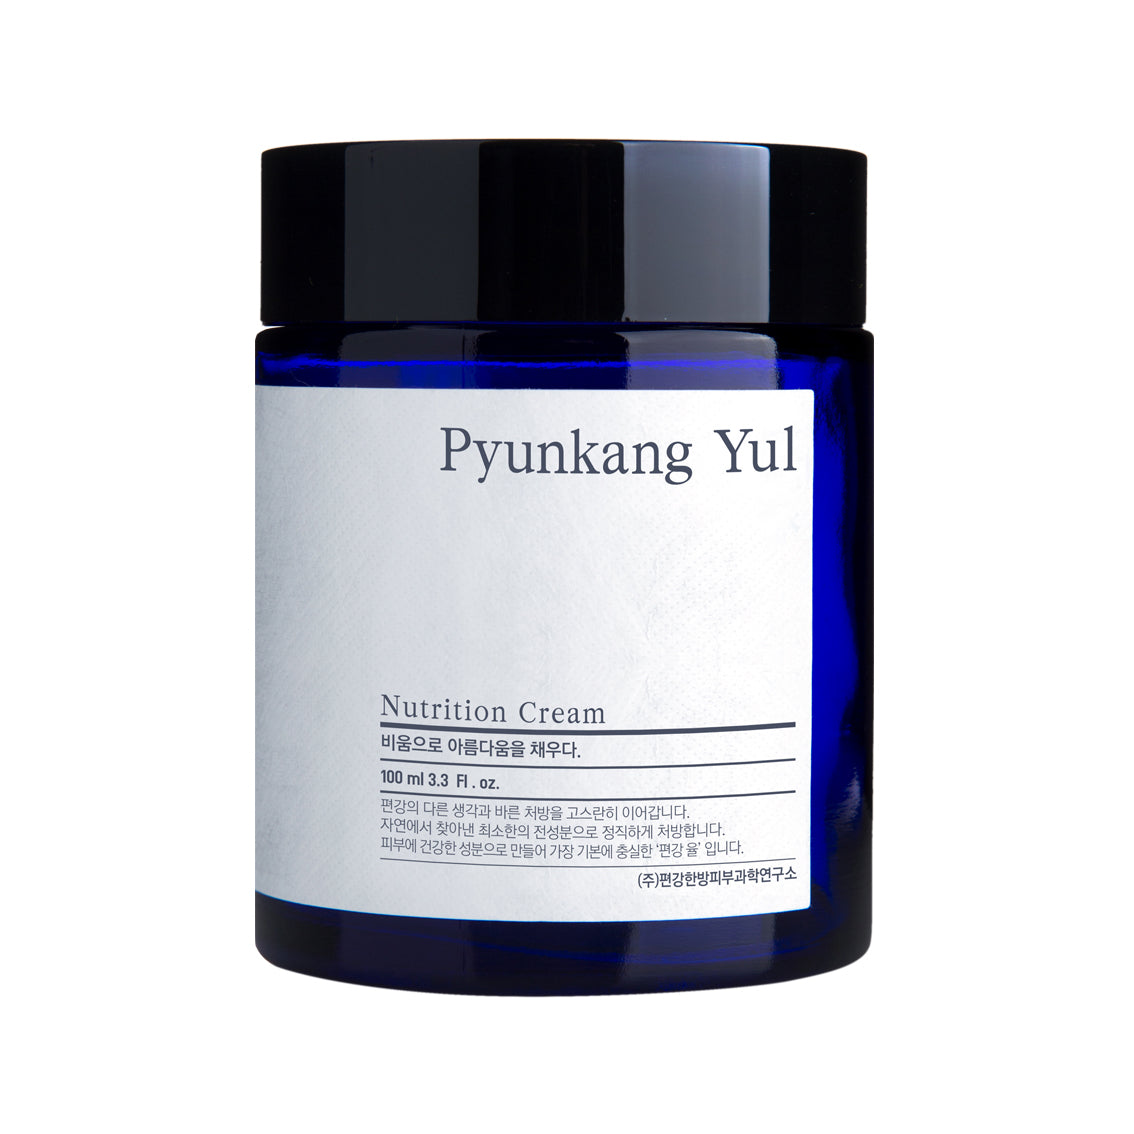 Pyunkang Yul - Nutrition Cream (100ml) K Beauty UK AIGOO